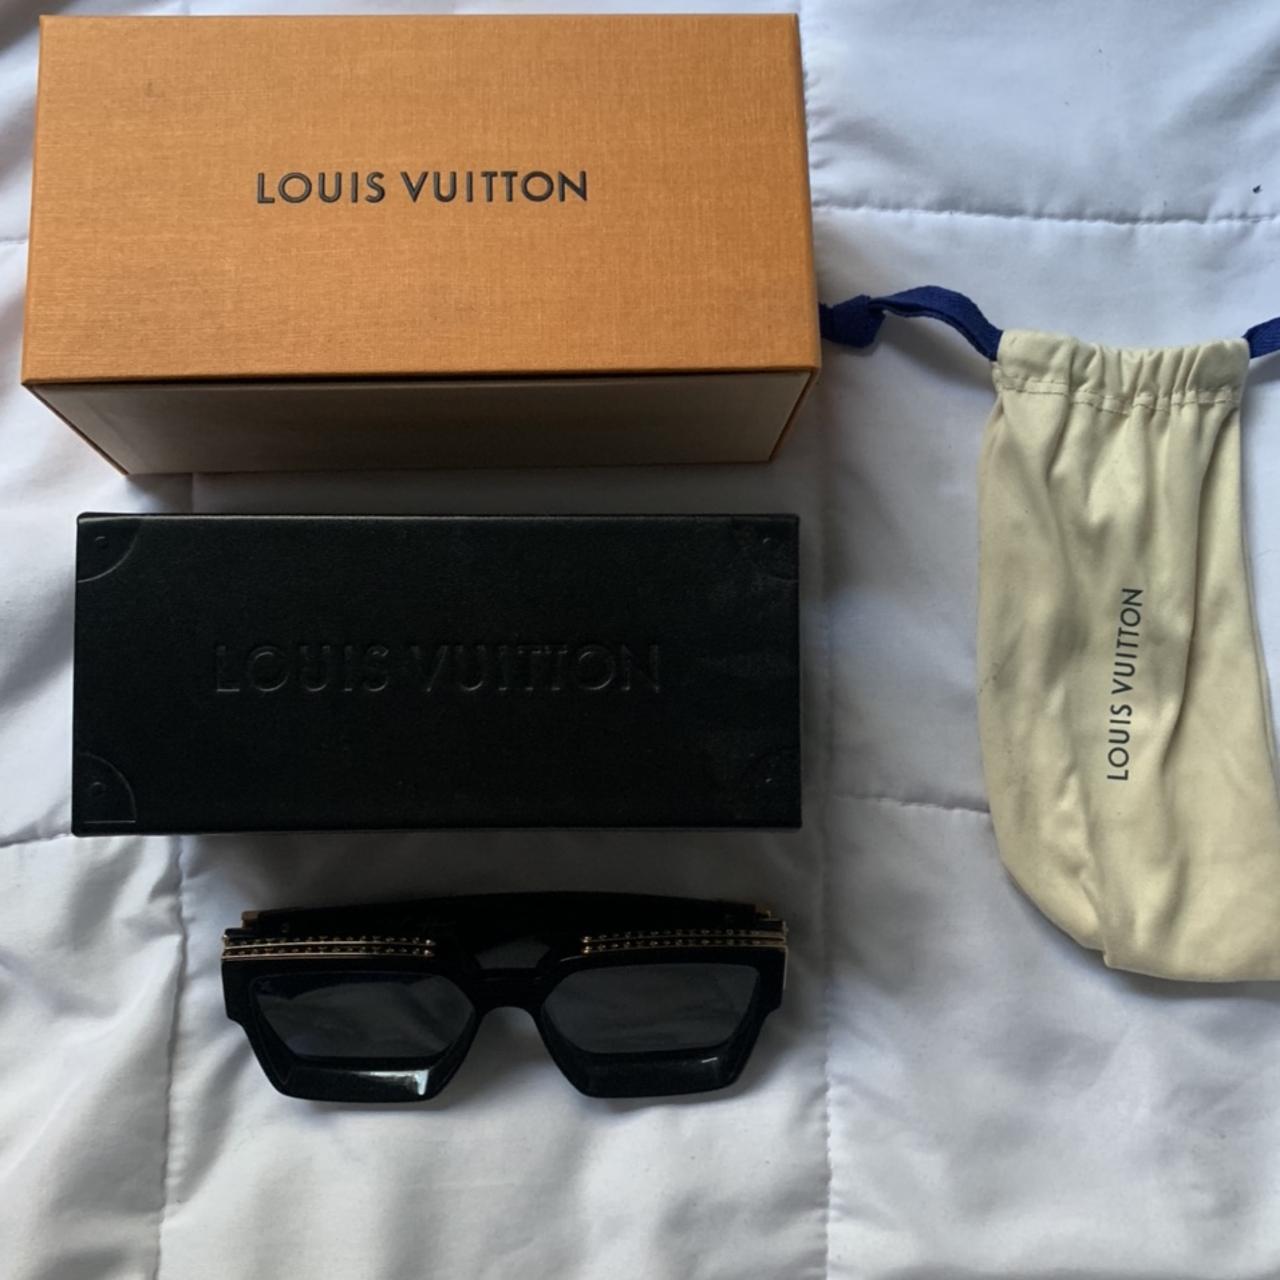 Louis Vuitton 1.1 Millionaires square sunglasses in - Depop